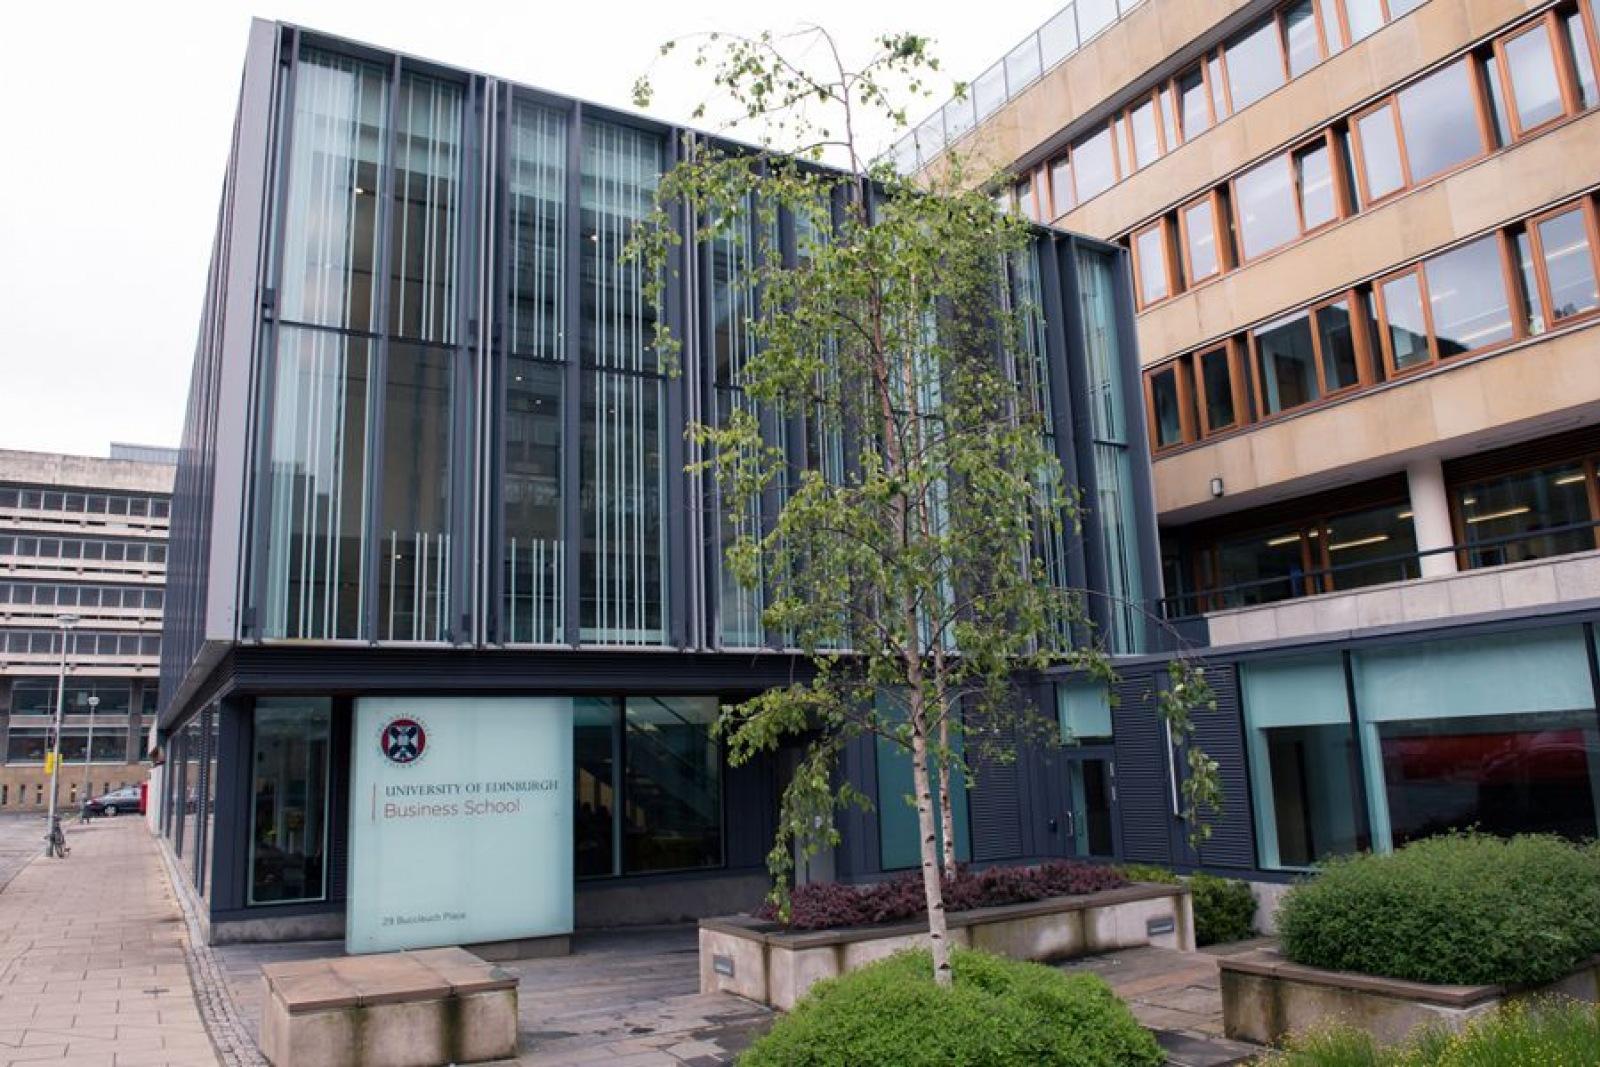 Outside doors of the University of Edinburgh Business School